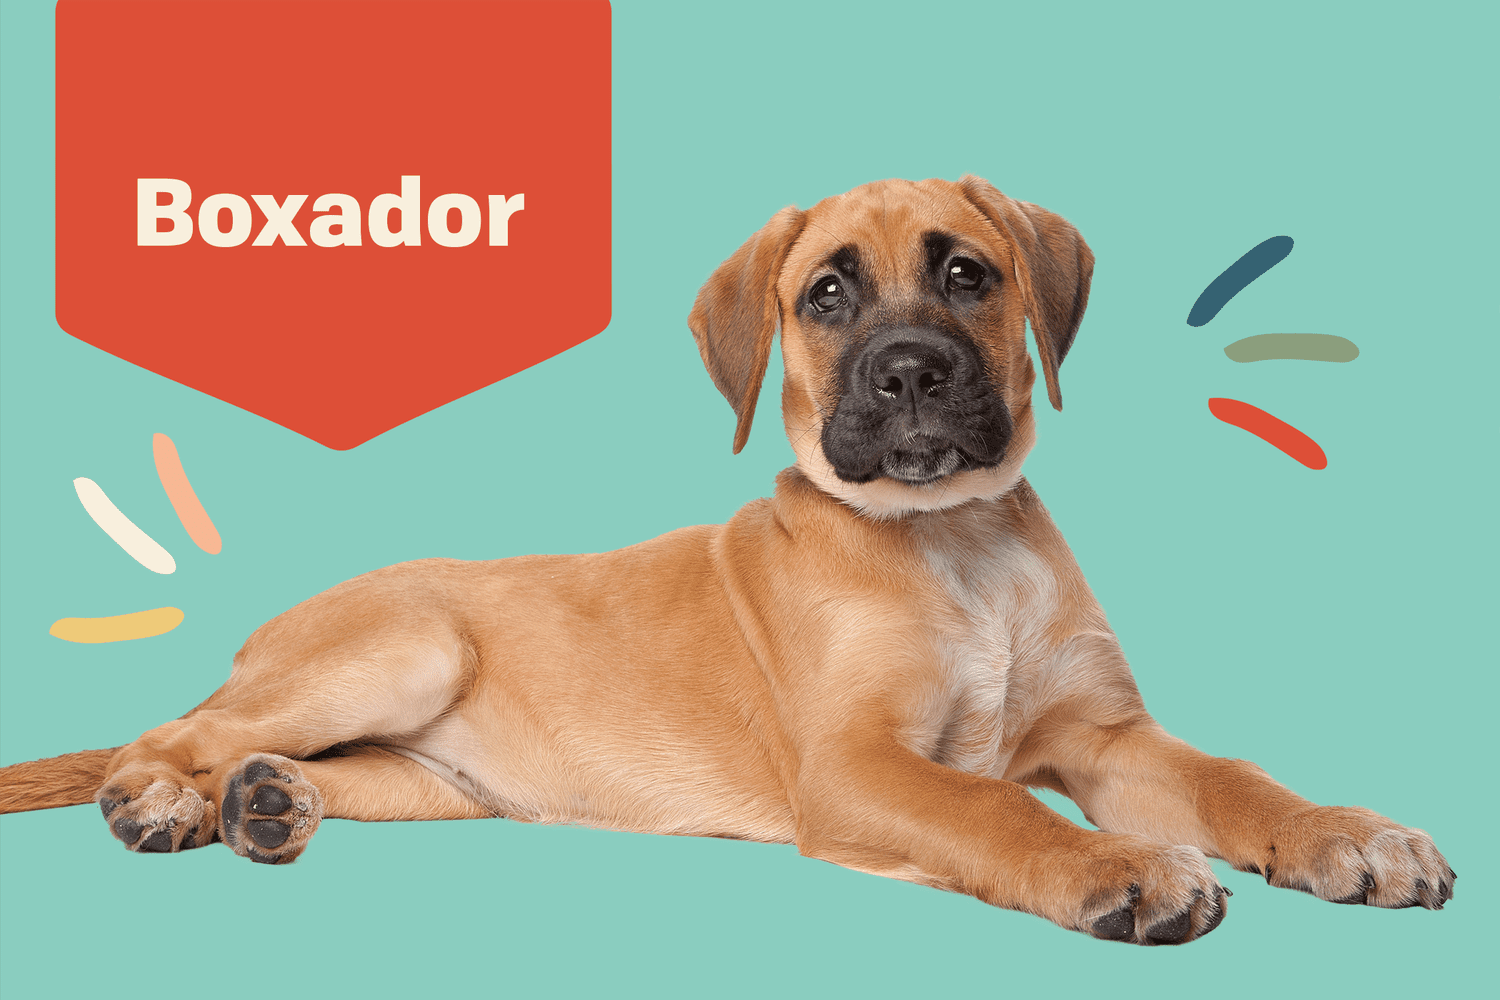 boxador dog breed profile treatment dog on a teal background